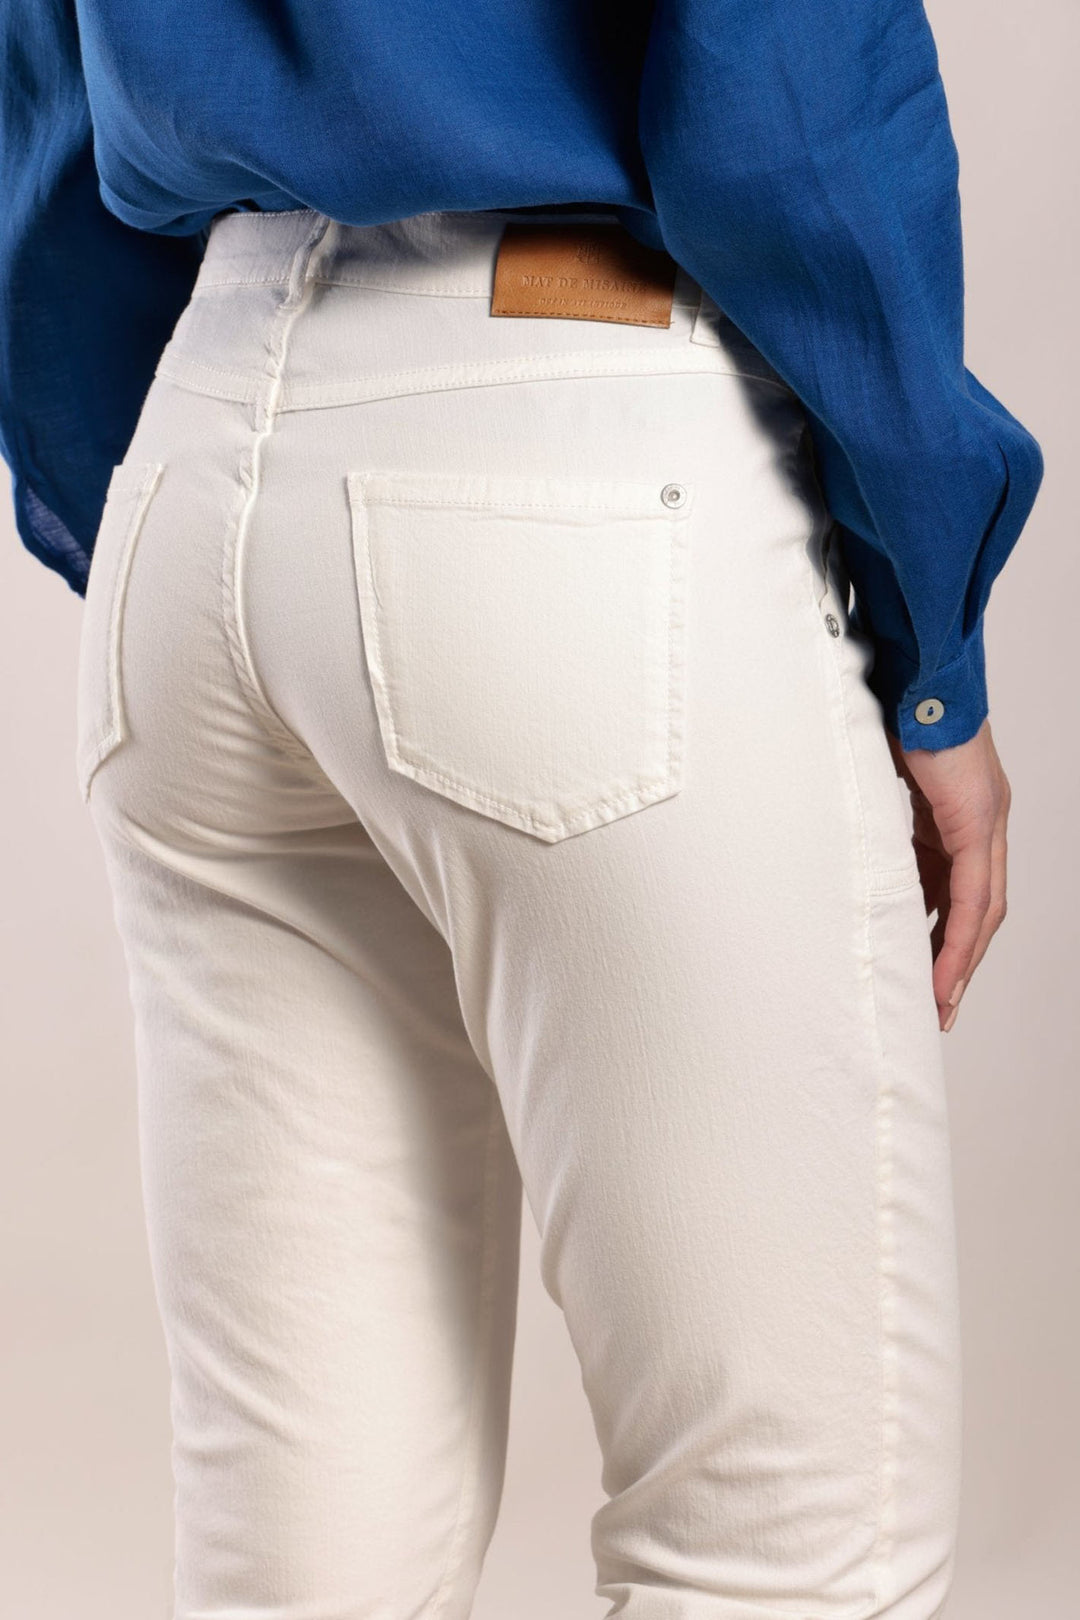 Mat De Misaine Pimoricou-34726 U15 Cream Limestone Cropped Trousers - Shirley Allum Boutique